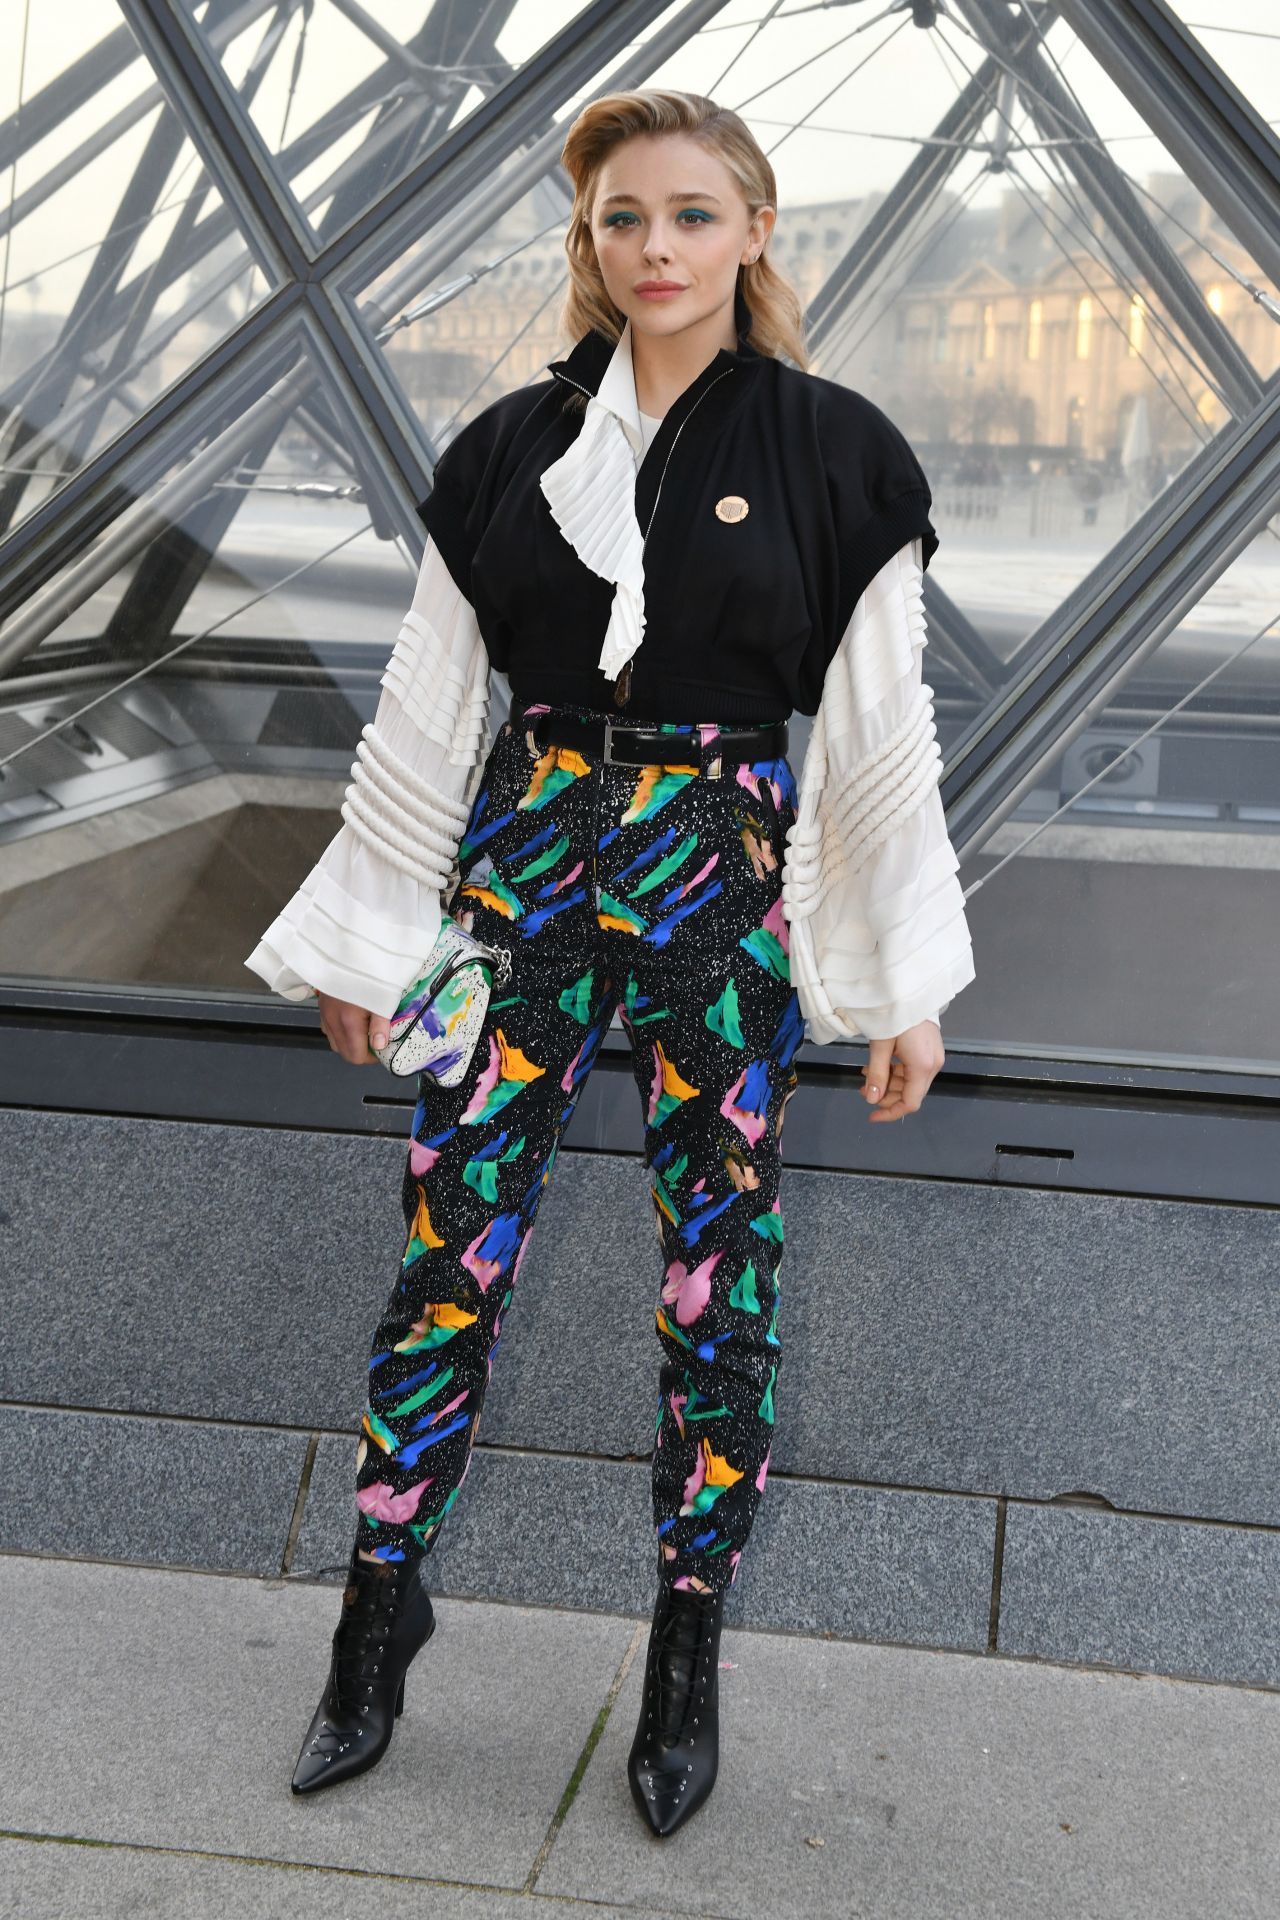 Image Chloe Grace Moretz Louis Vuitton Pose trainers young woman